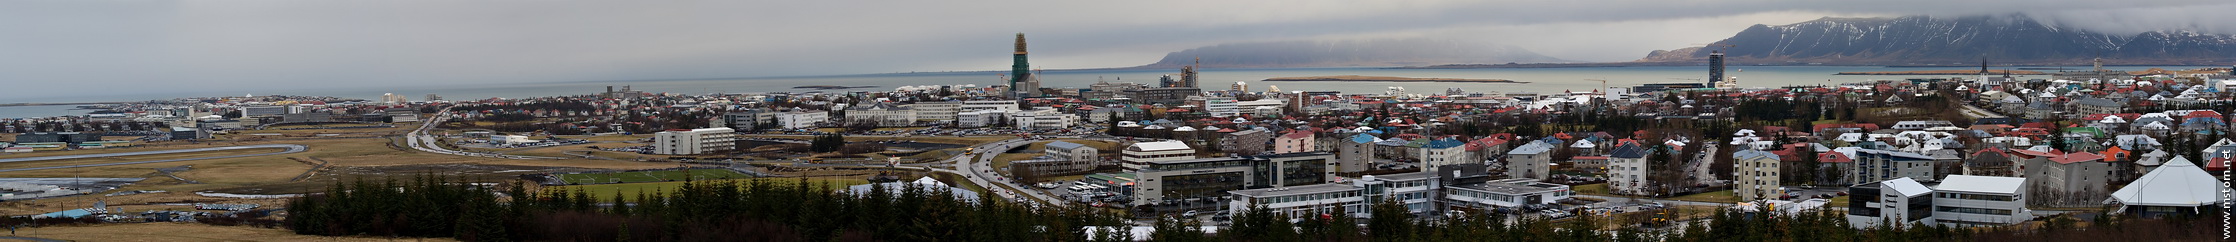 Reykjavik_Panorama1.JPG